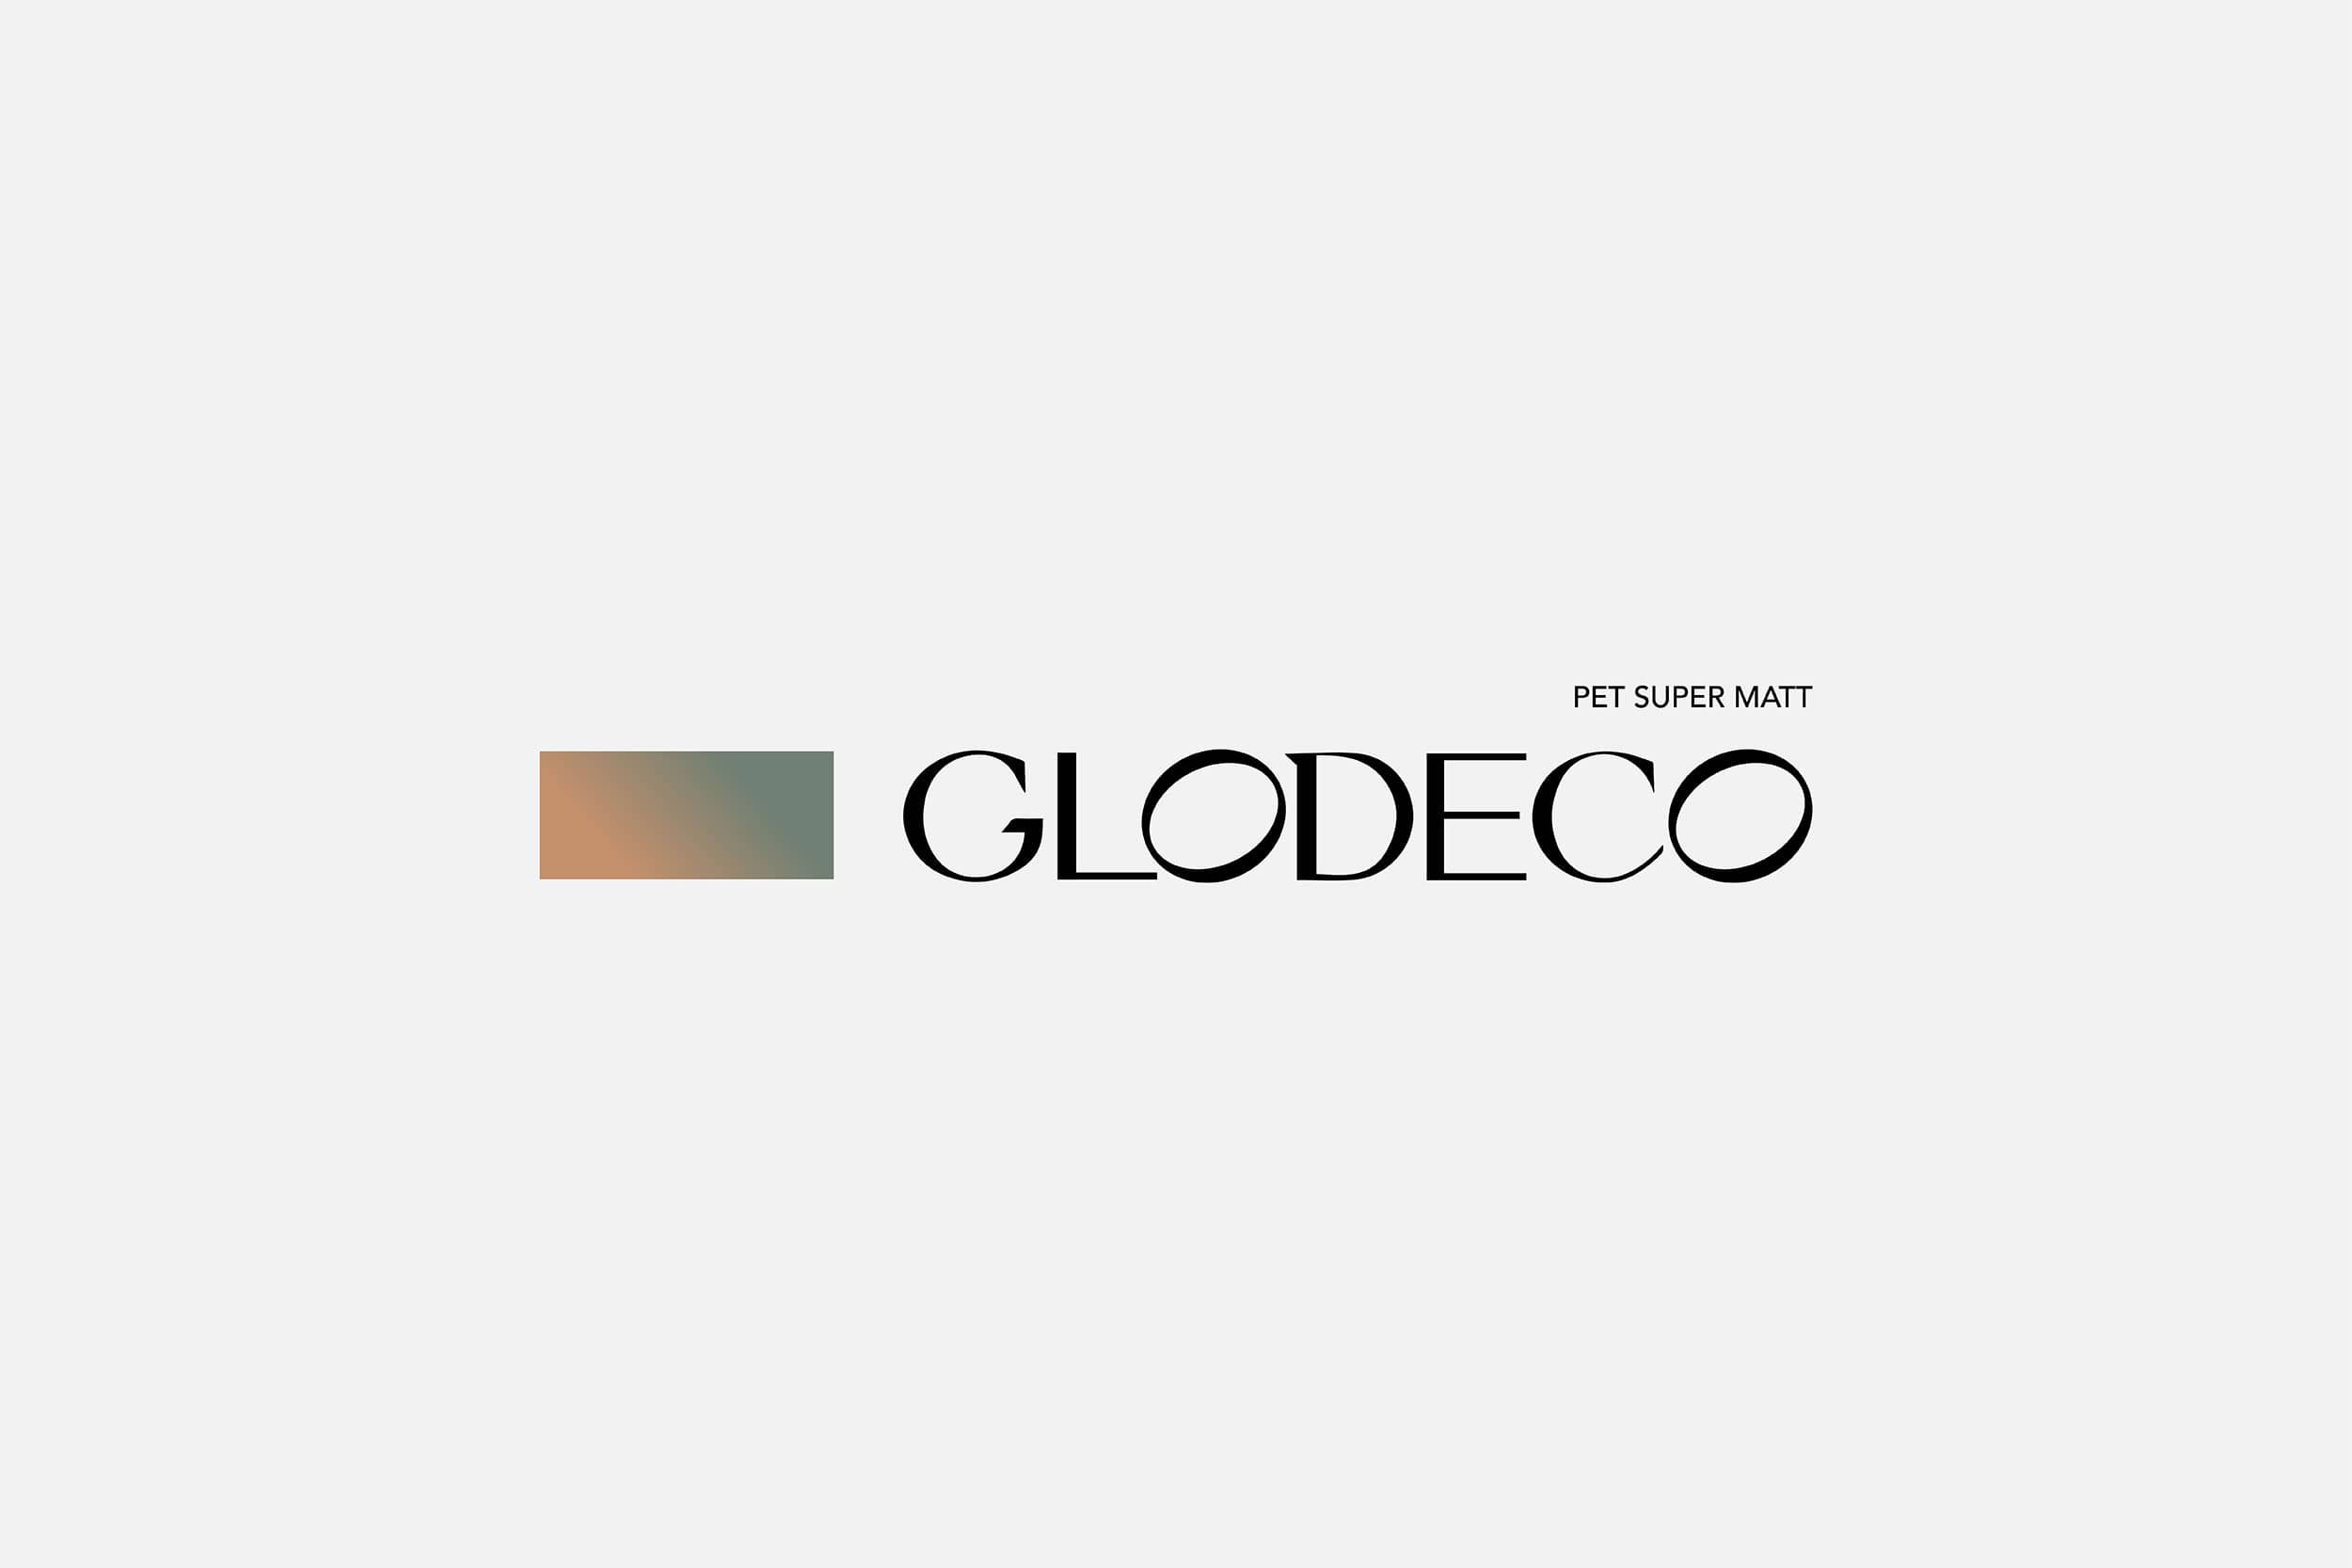 Разработка фирменного стиля для "Glodeco super matt